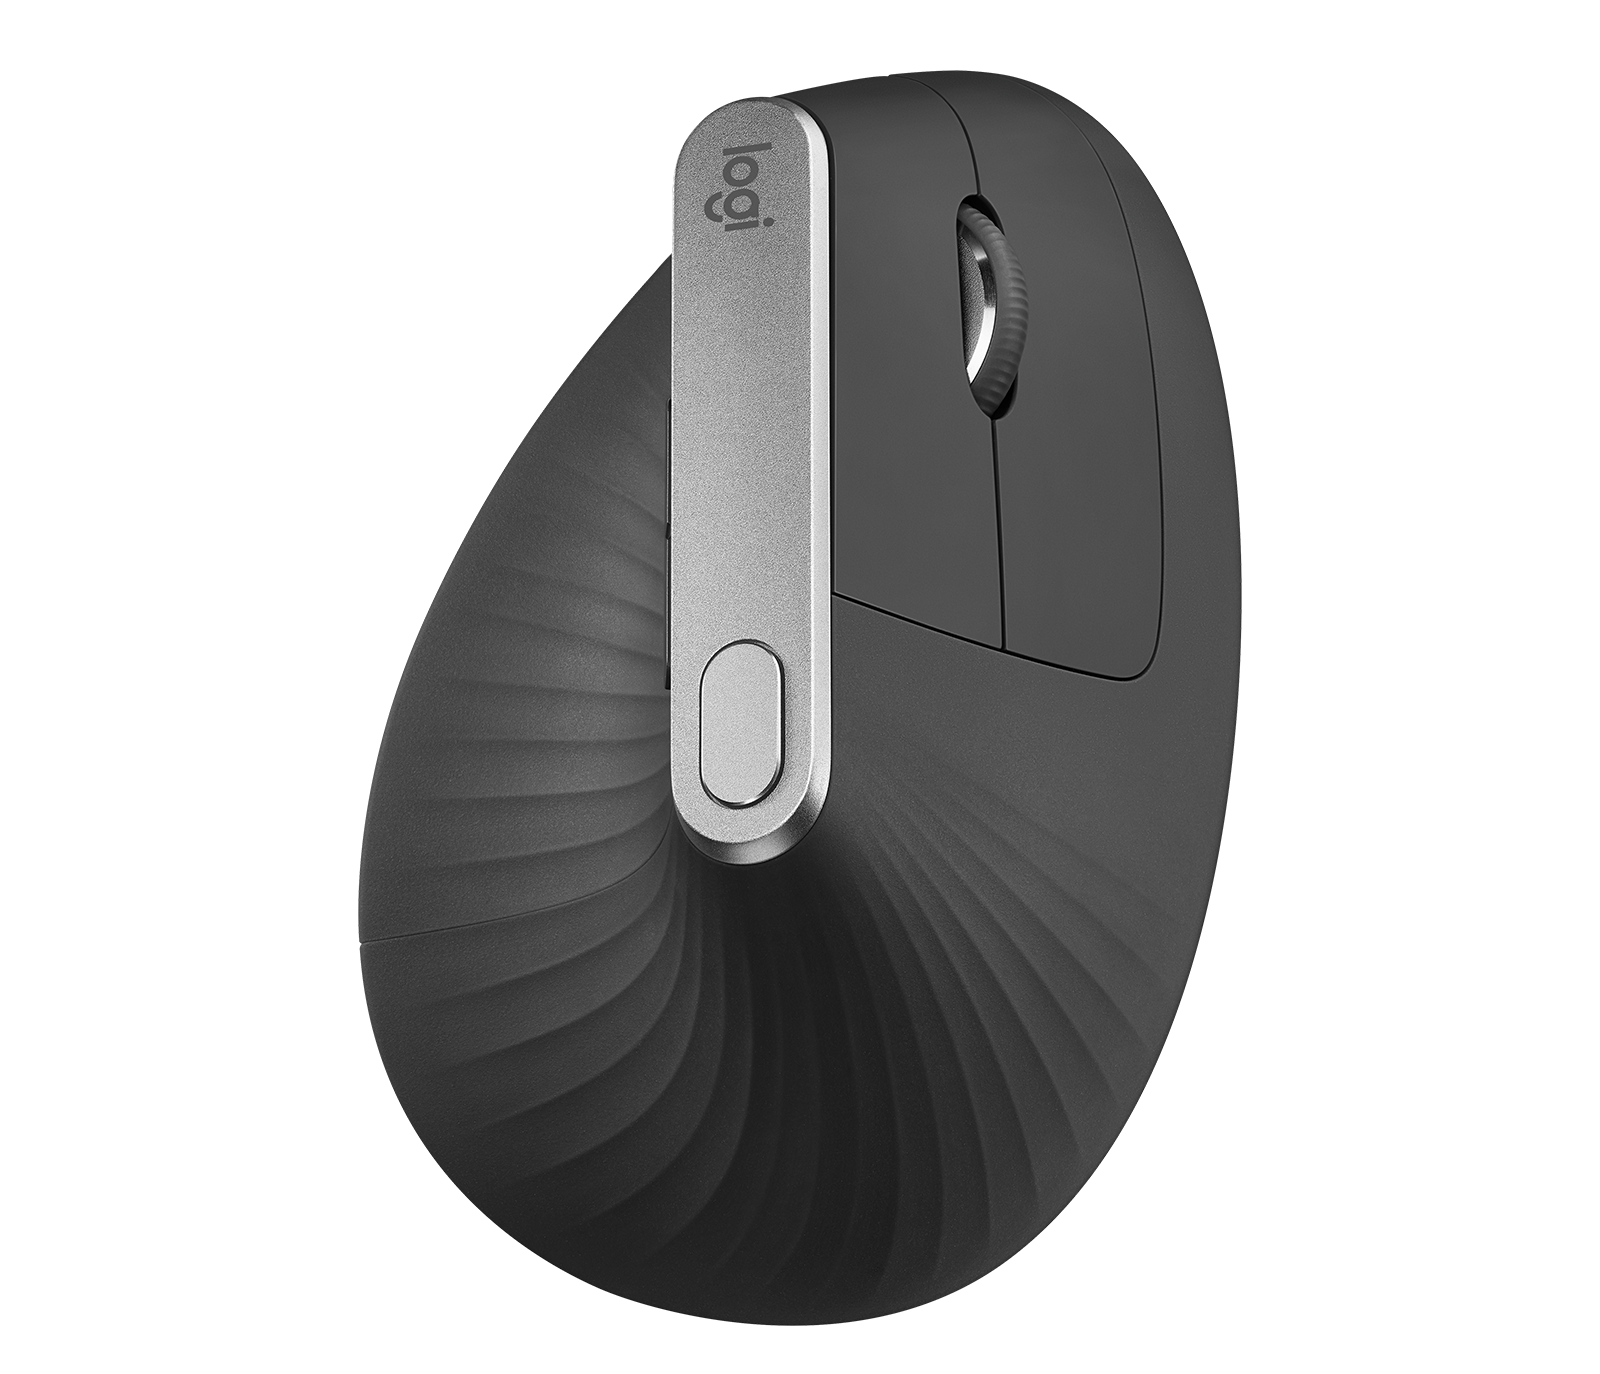 Logitech MX Vertical Ergonomic Wireless Mouse in Graphite